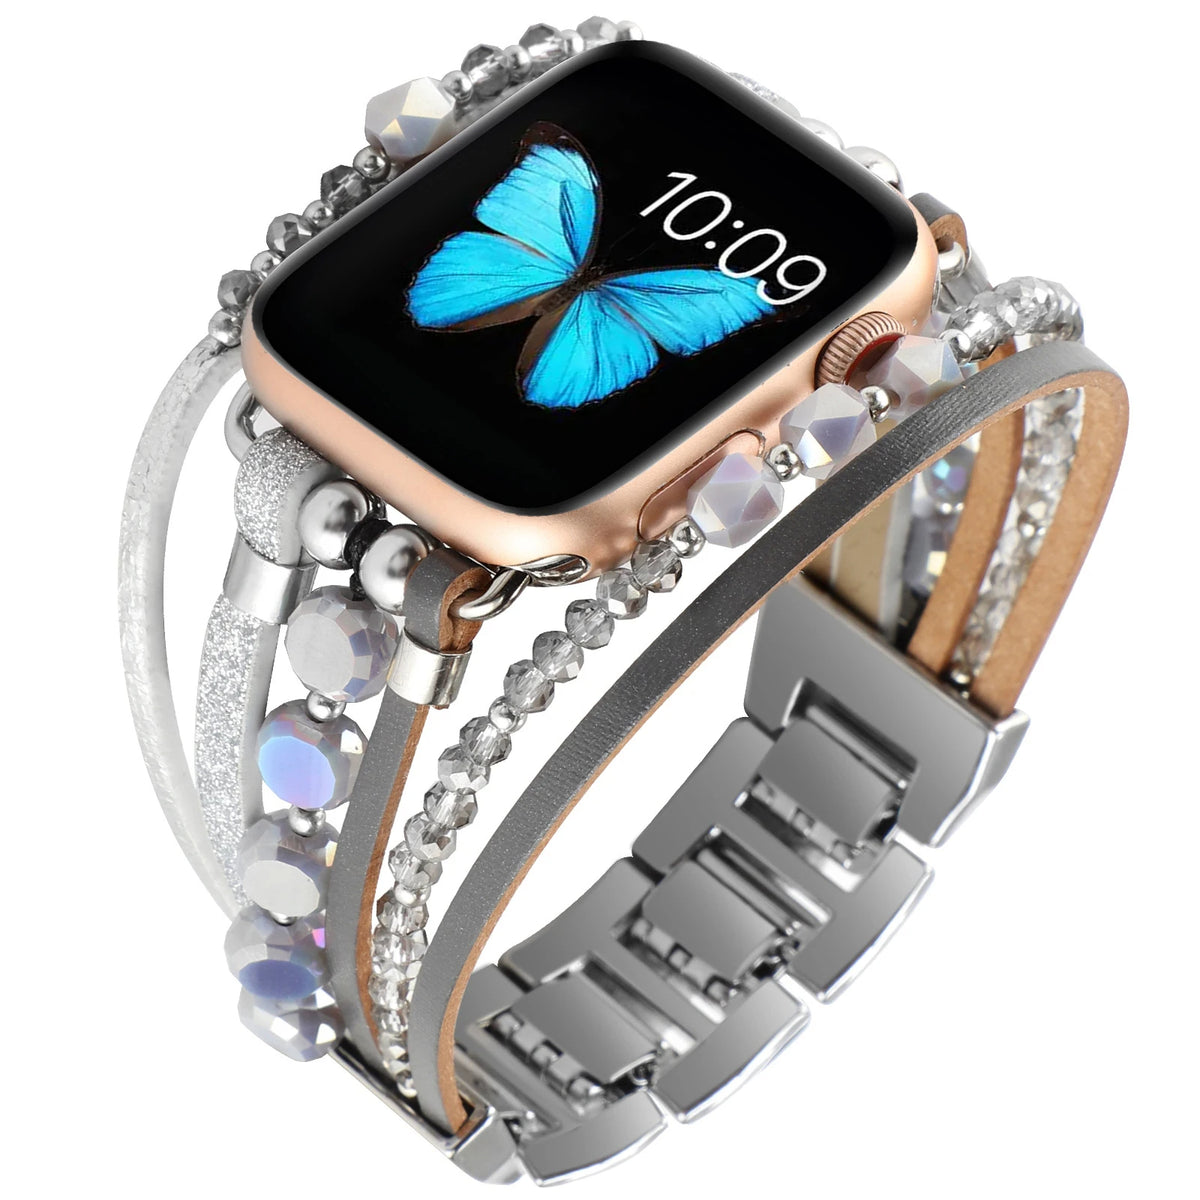 Perlenbesetztes Apple Watch Band